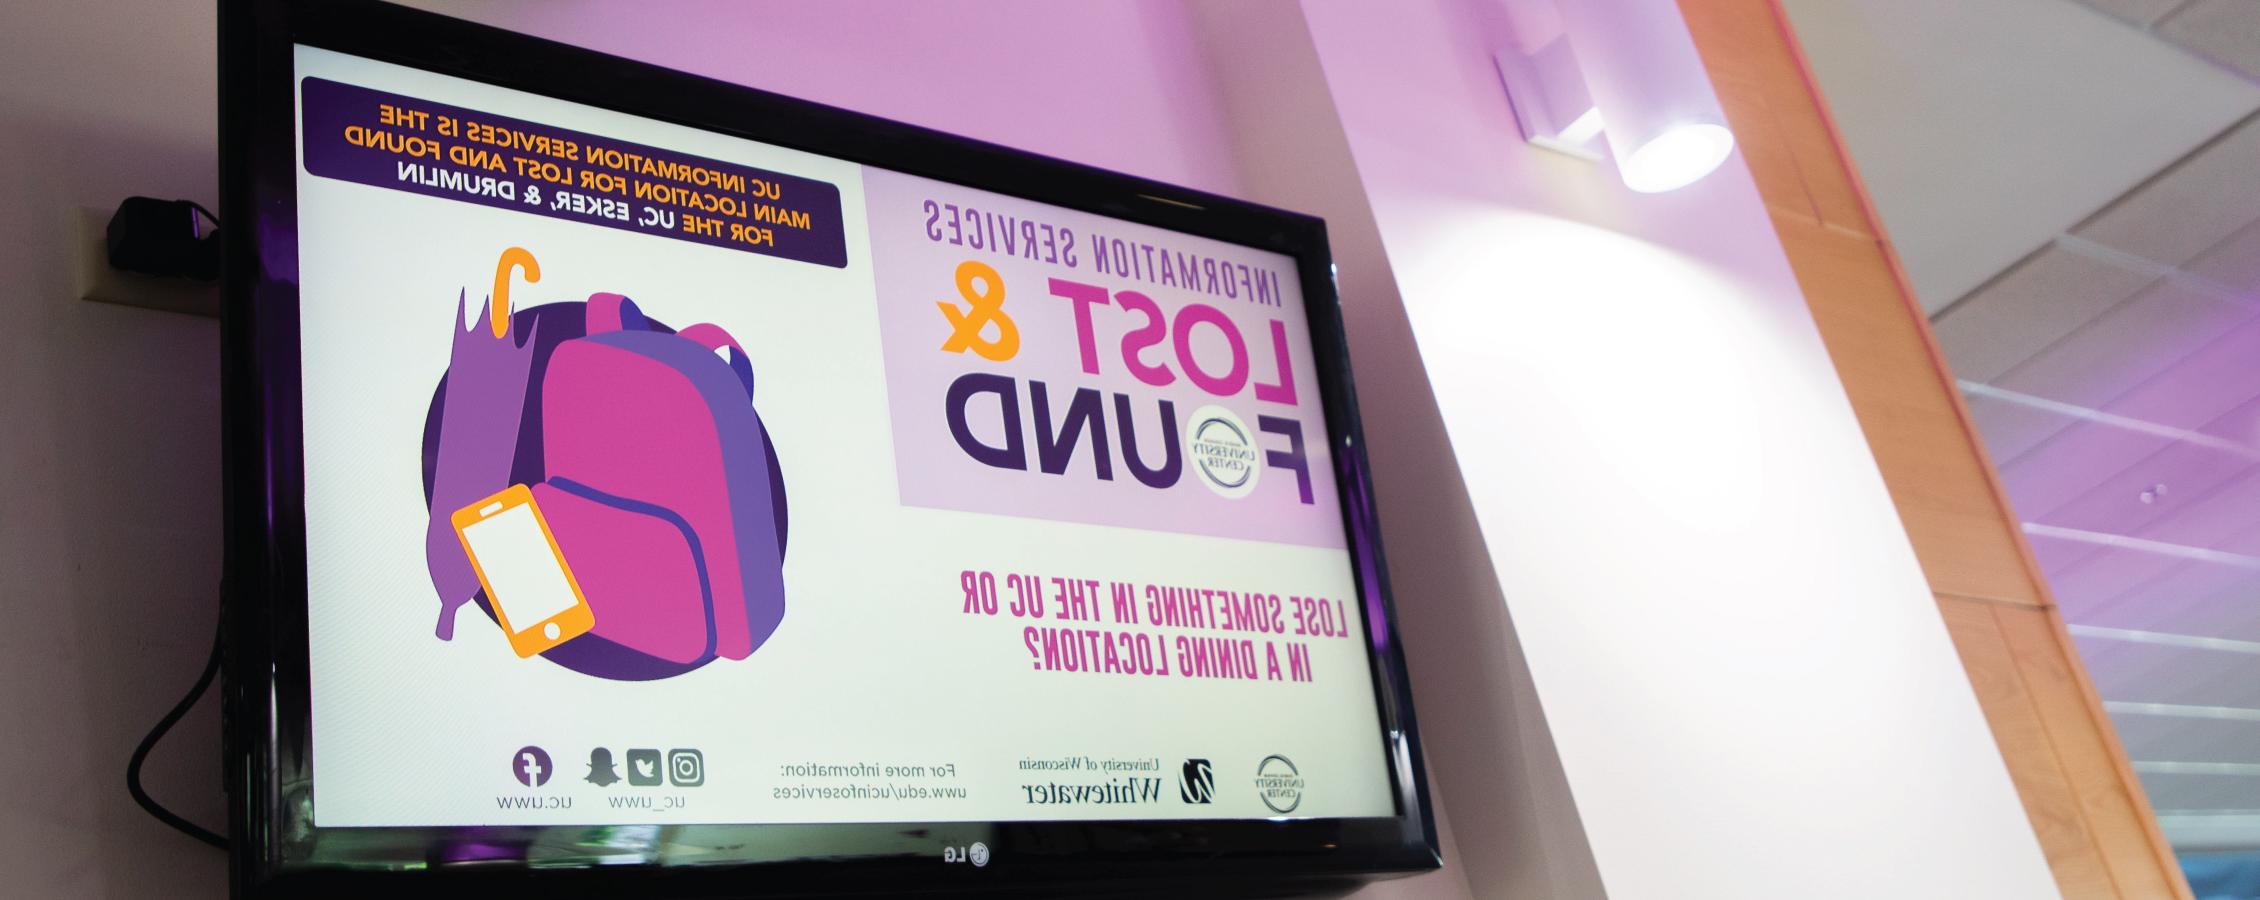 University Center digital signage advertising